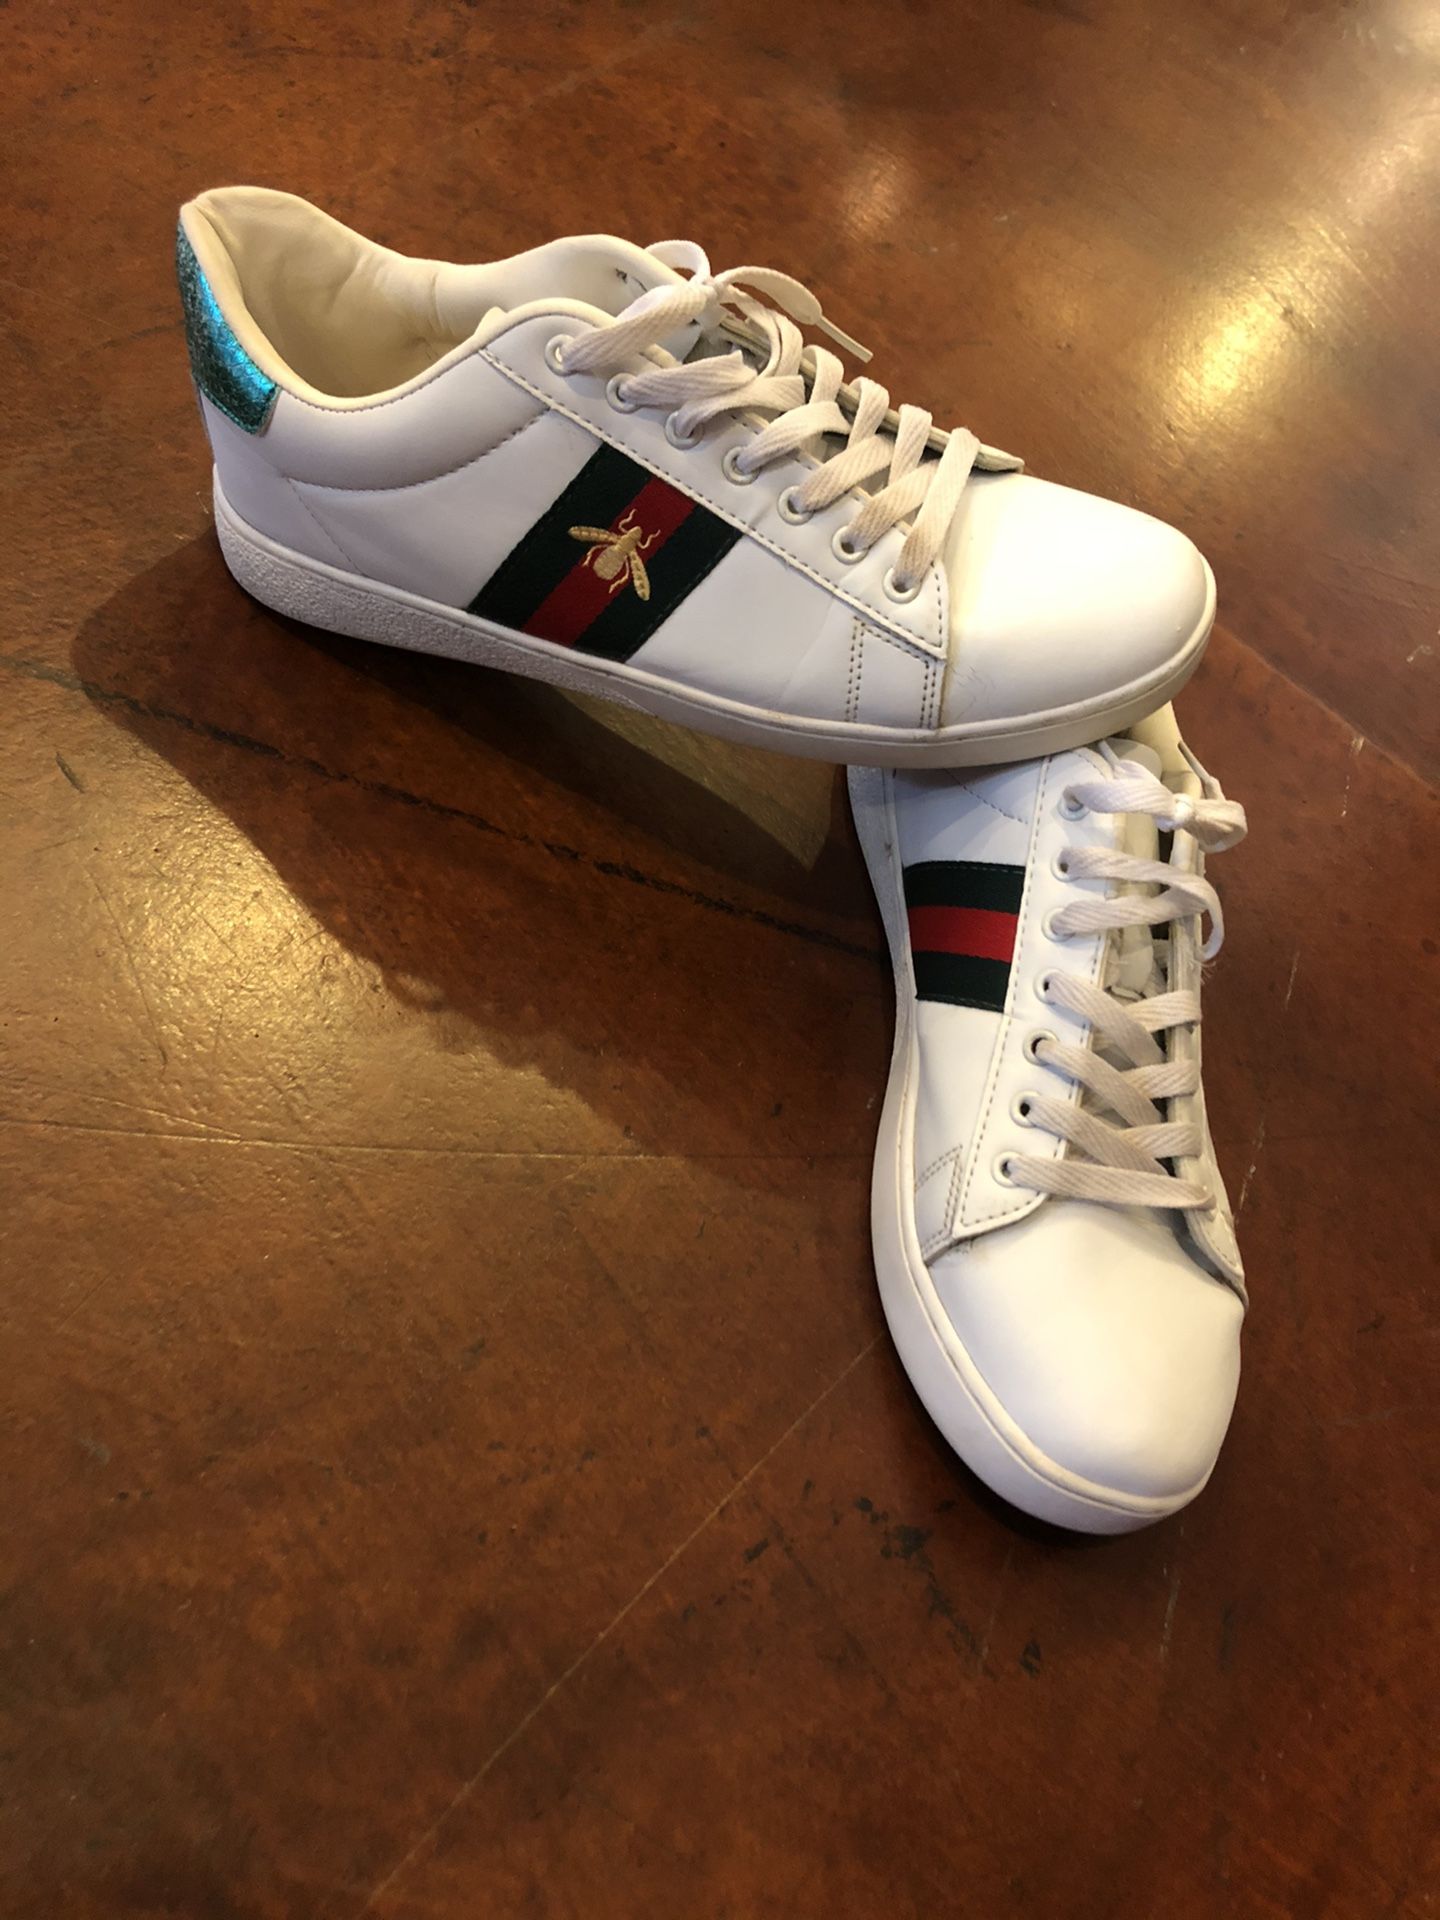 Gucci Tennis Shoes Size 9.5